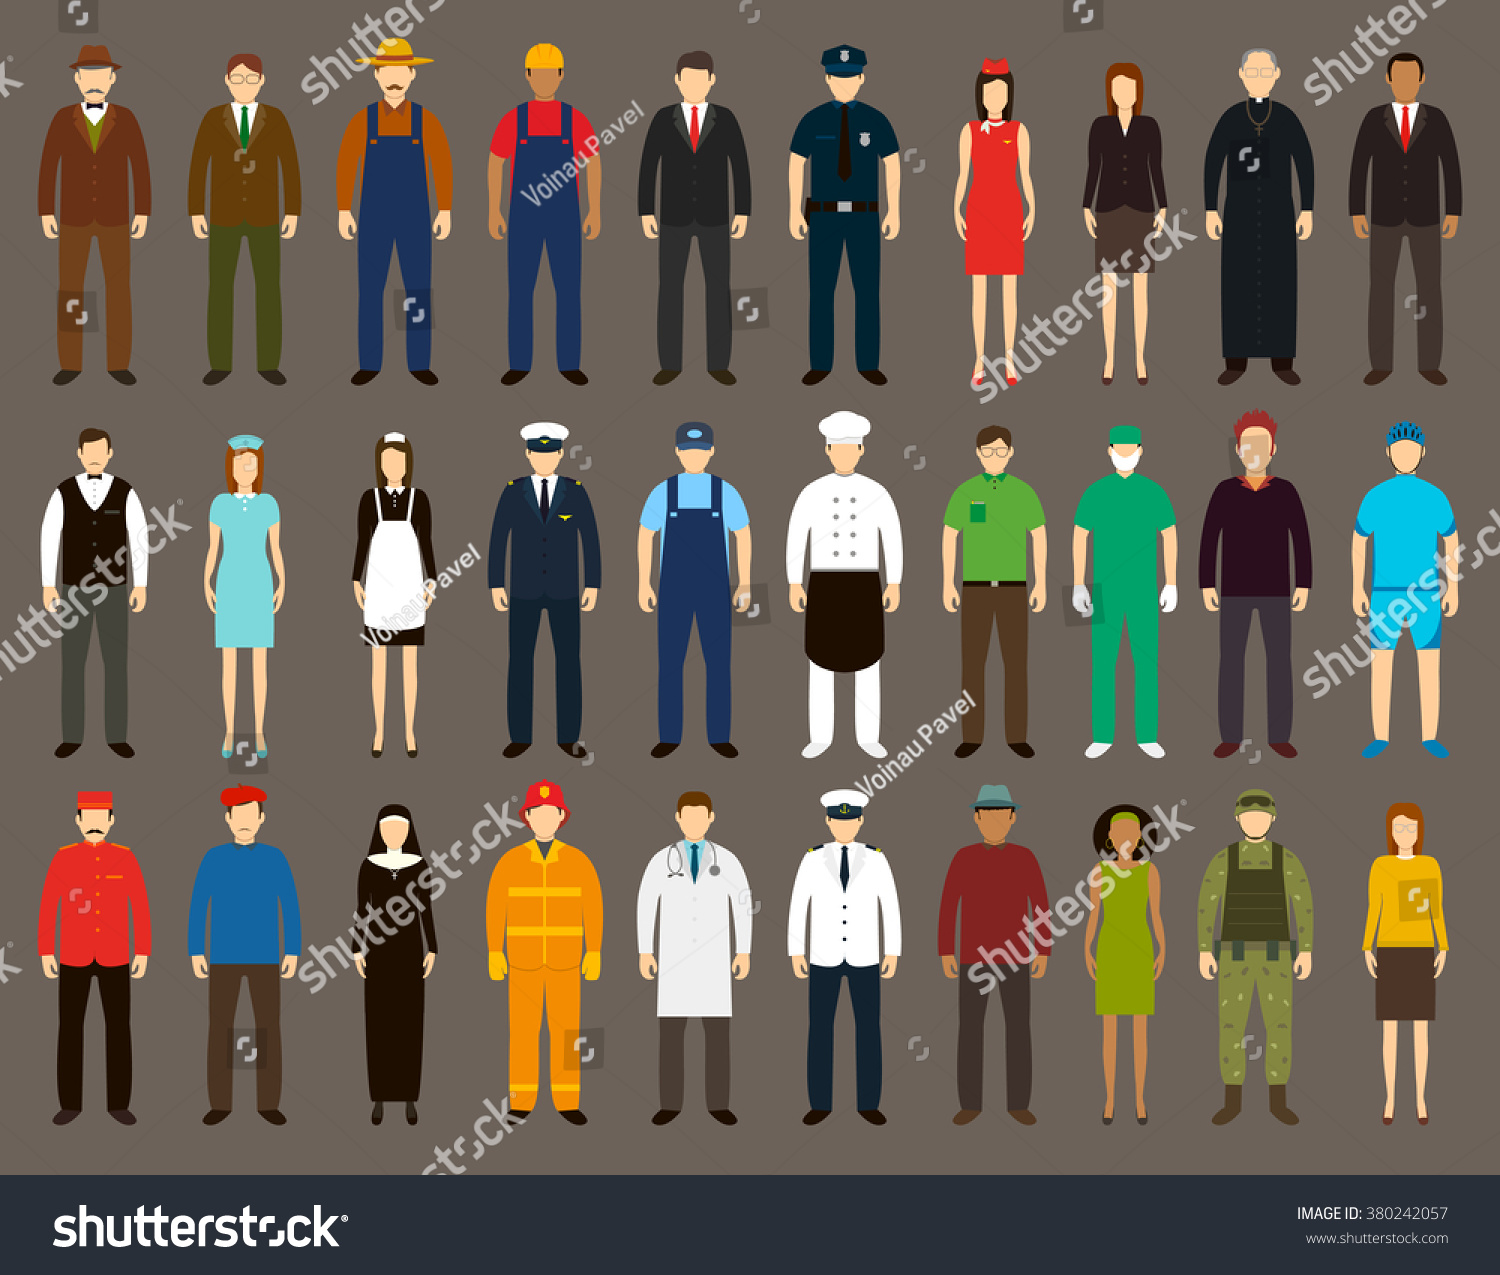 Profession People Set. Vector Illustrations - 380242057 : Shutterstock